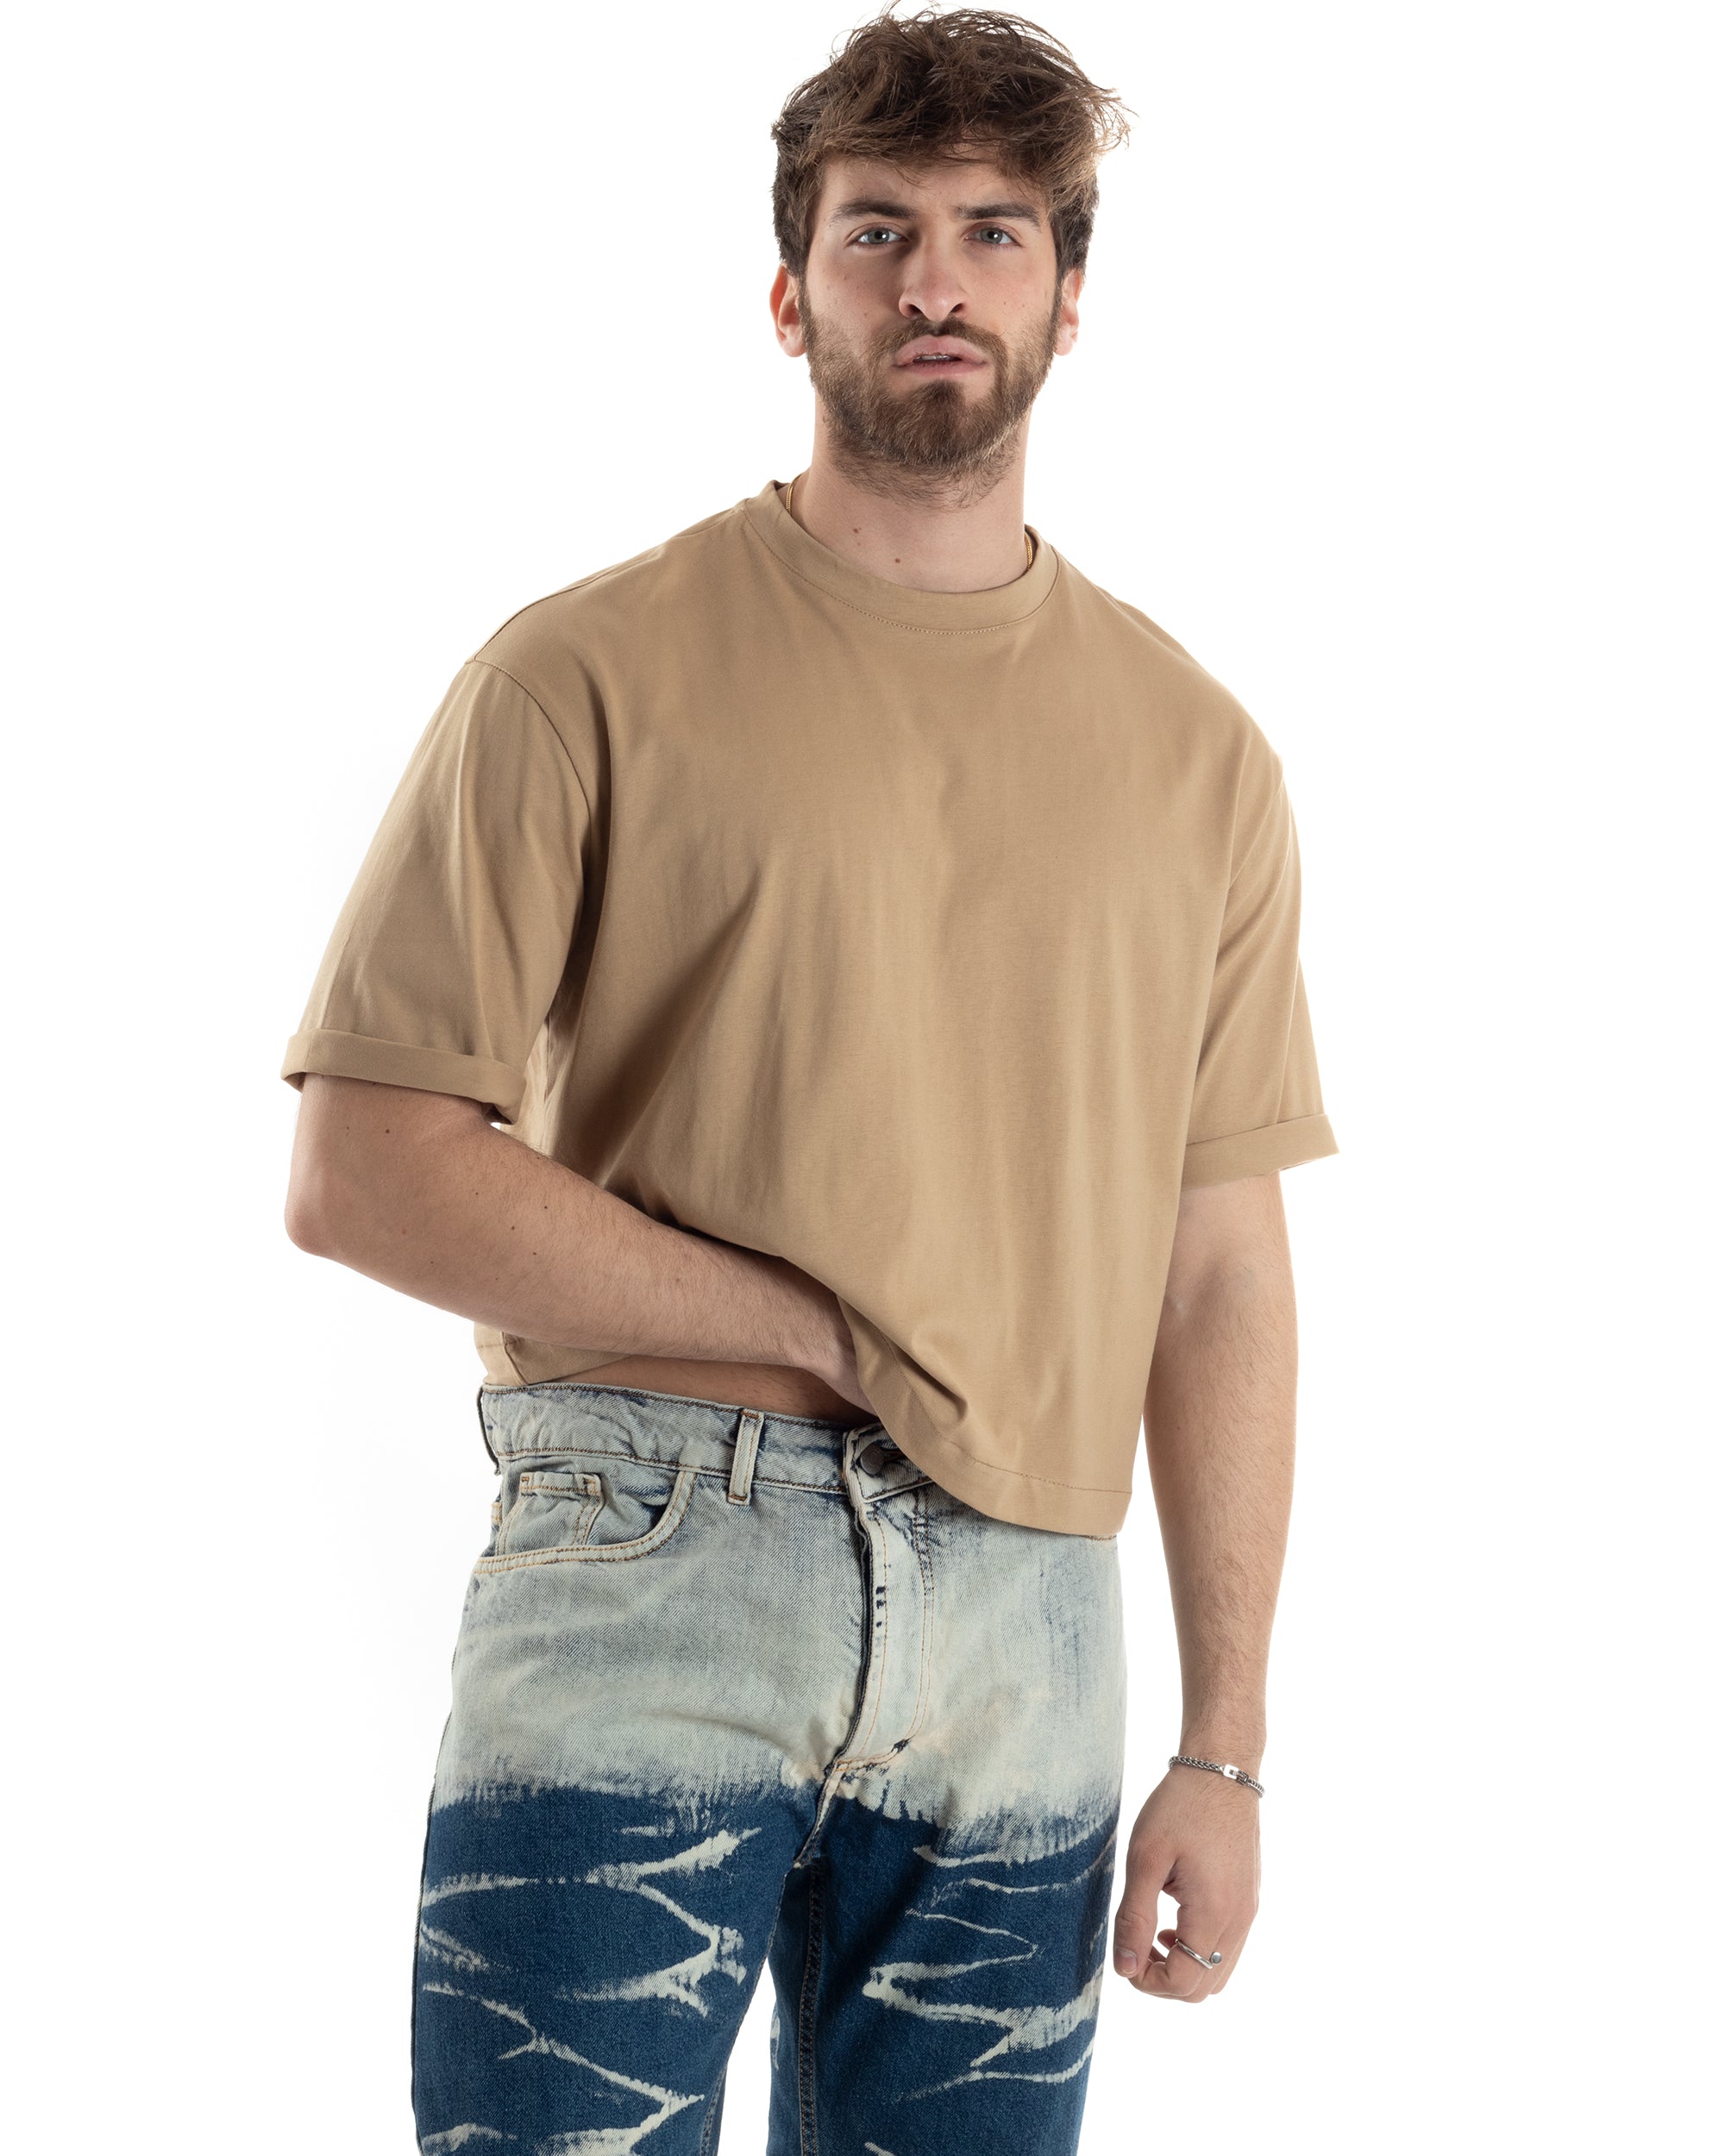 T-shirt Uomo Cropped Corta Boxy Fit Tinta Unita Camel Casual GIOSAL-TS3009A